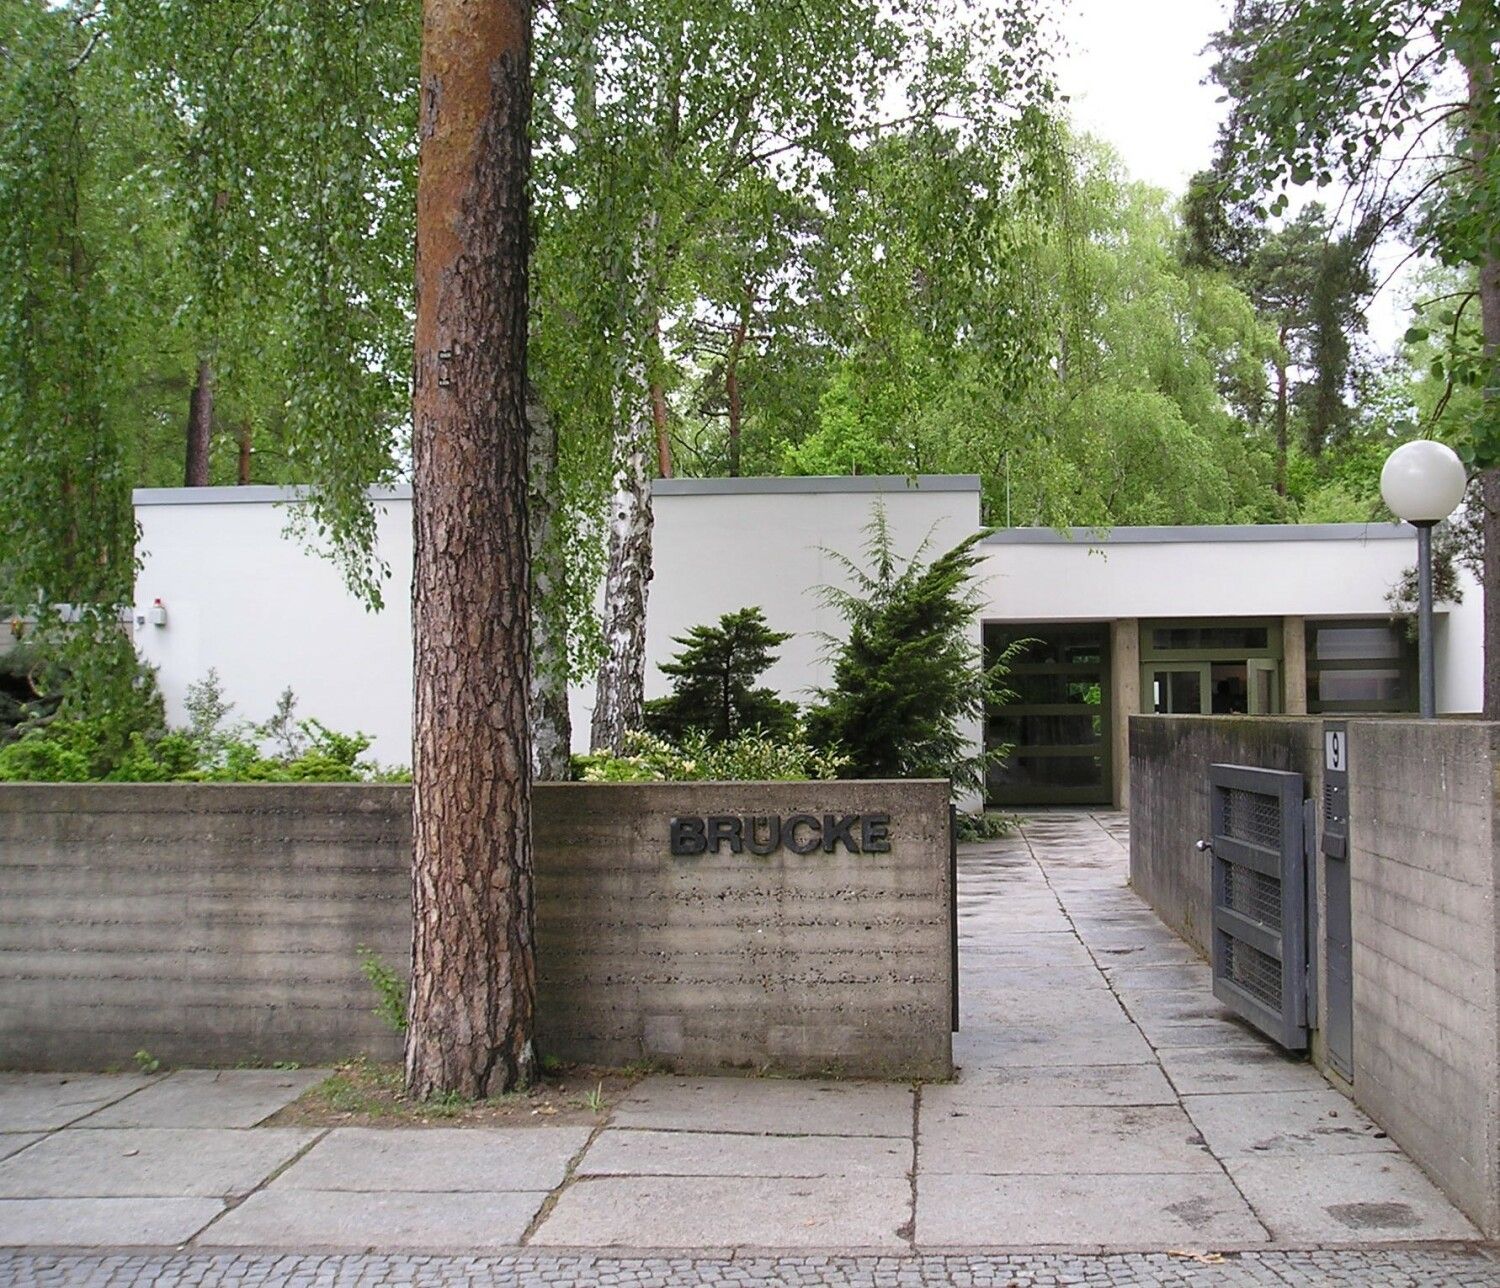 Brücke-Museum in Dahlem